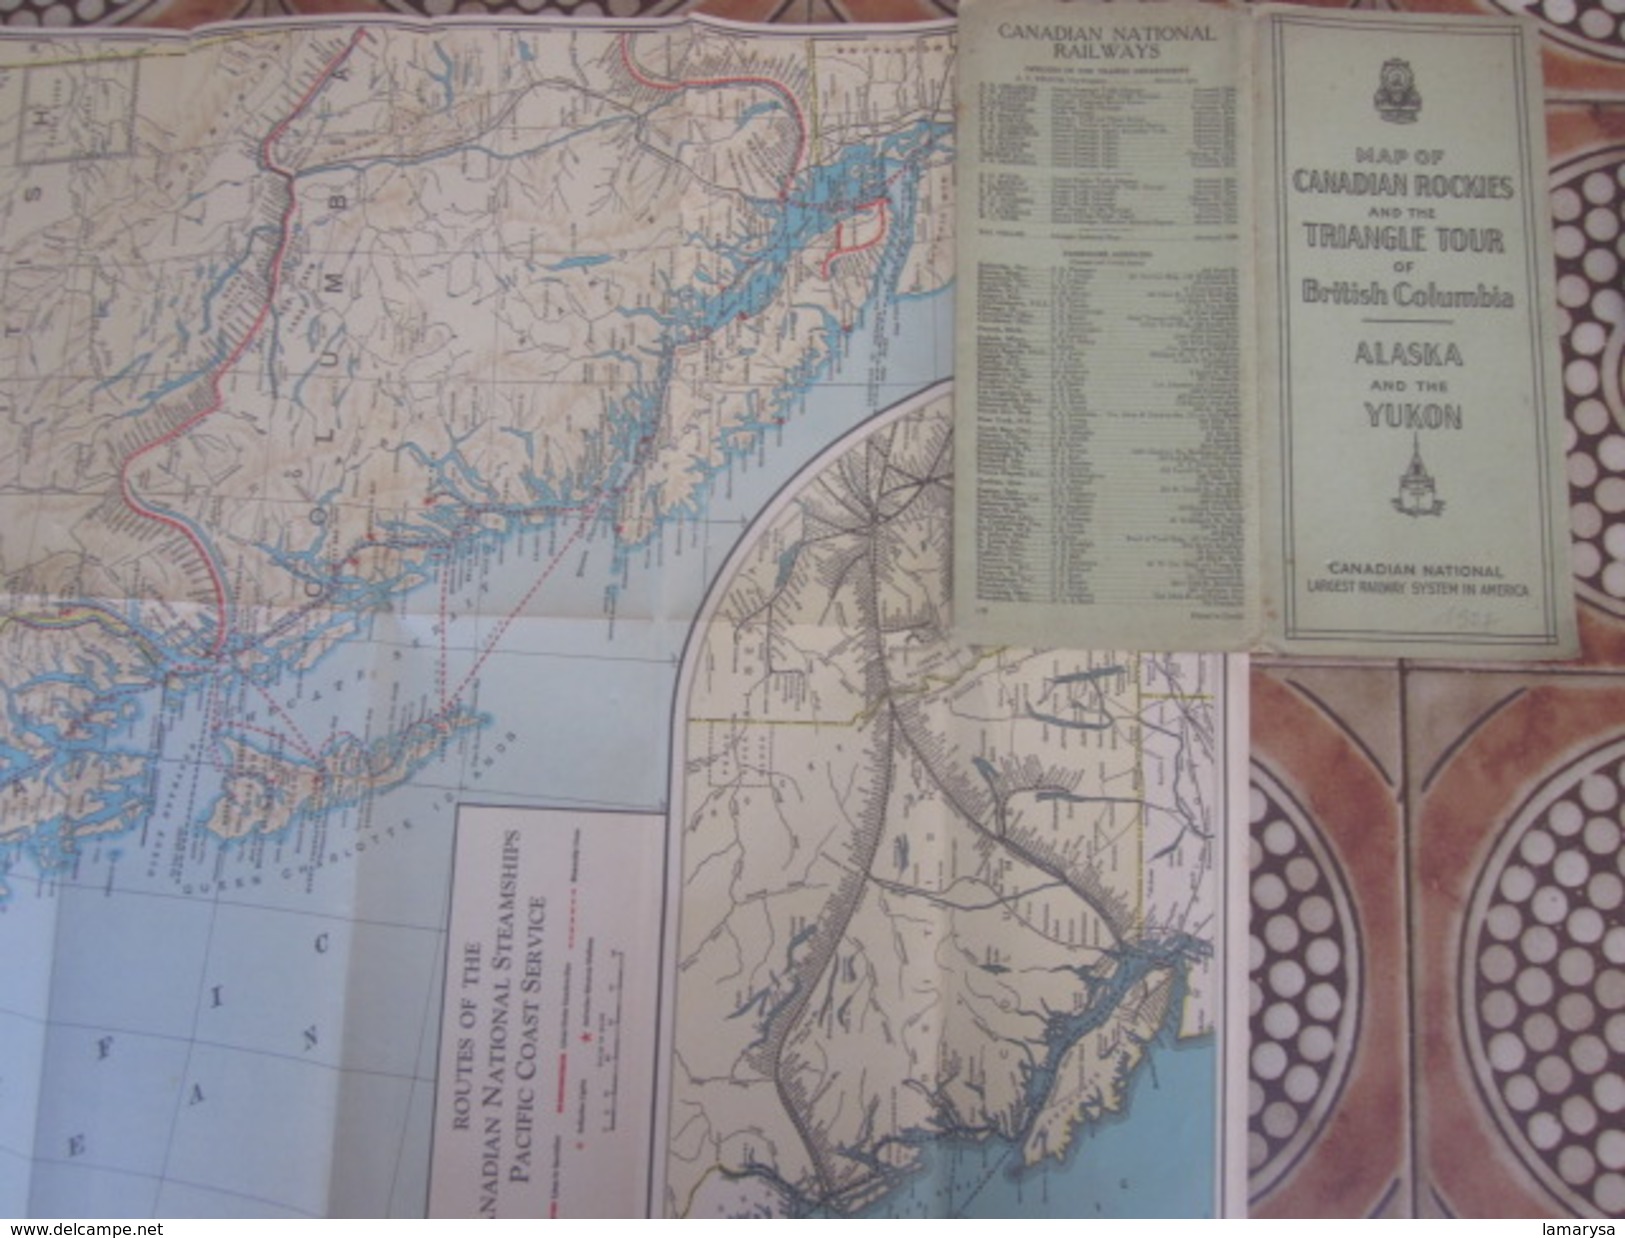 1927 MAP of Canadian N RAILWAY Rockies & Triangle Tour of British Columbia Alaska-Yukon Carte Plan Réseaux-Schéma ligne